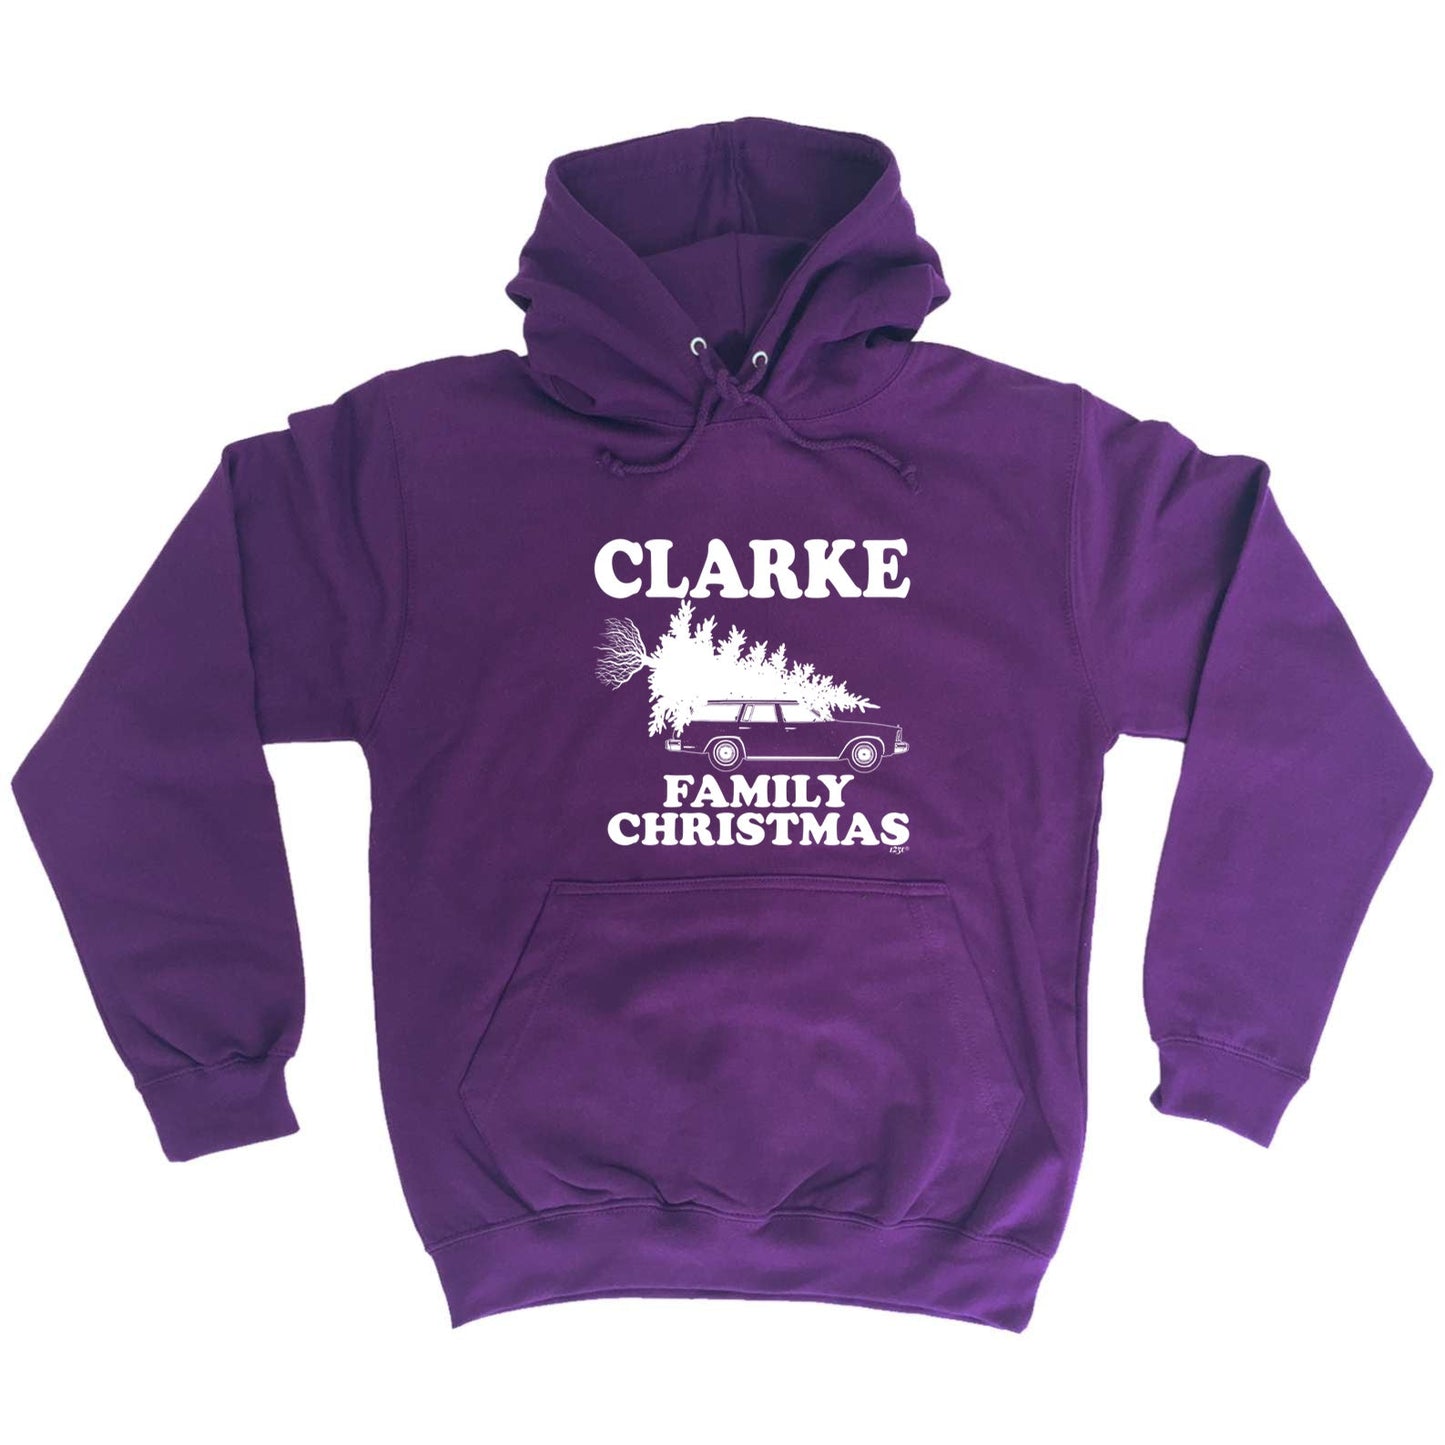 Family Christmas Clarke - Xmas Novelty Hoodies Hoodie